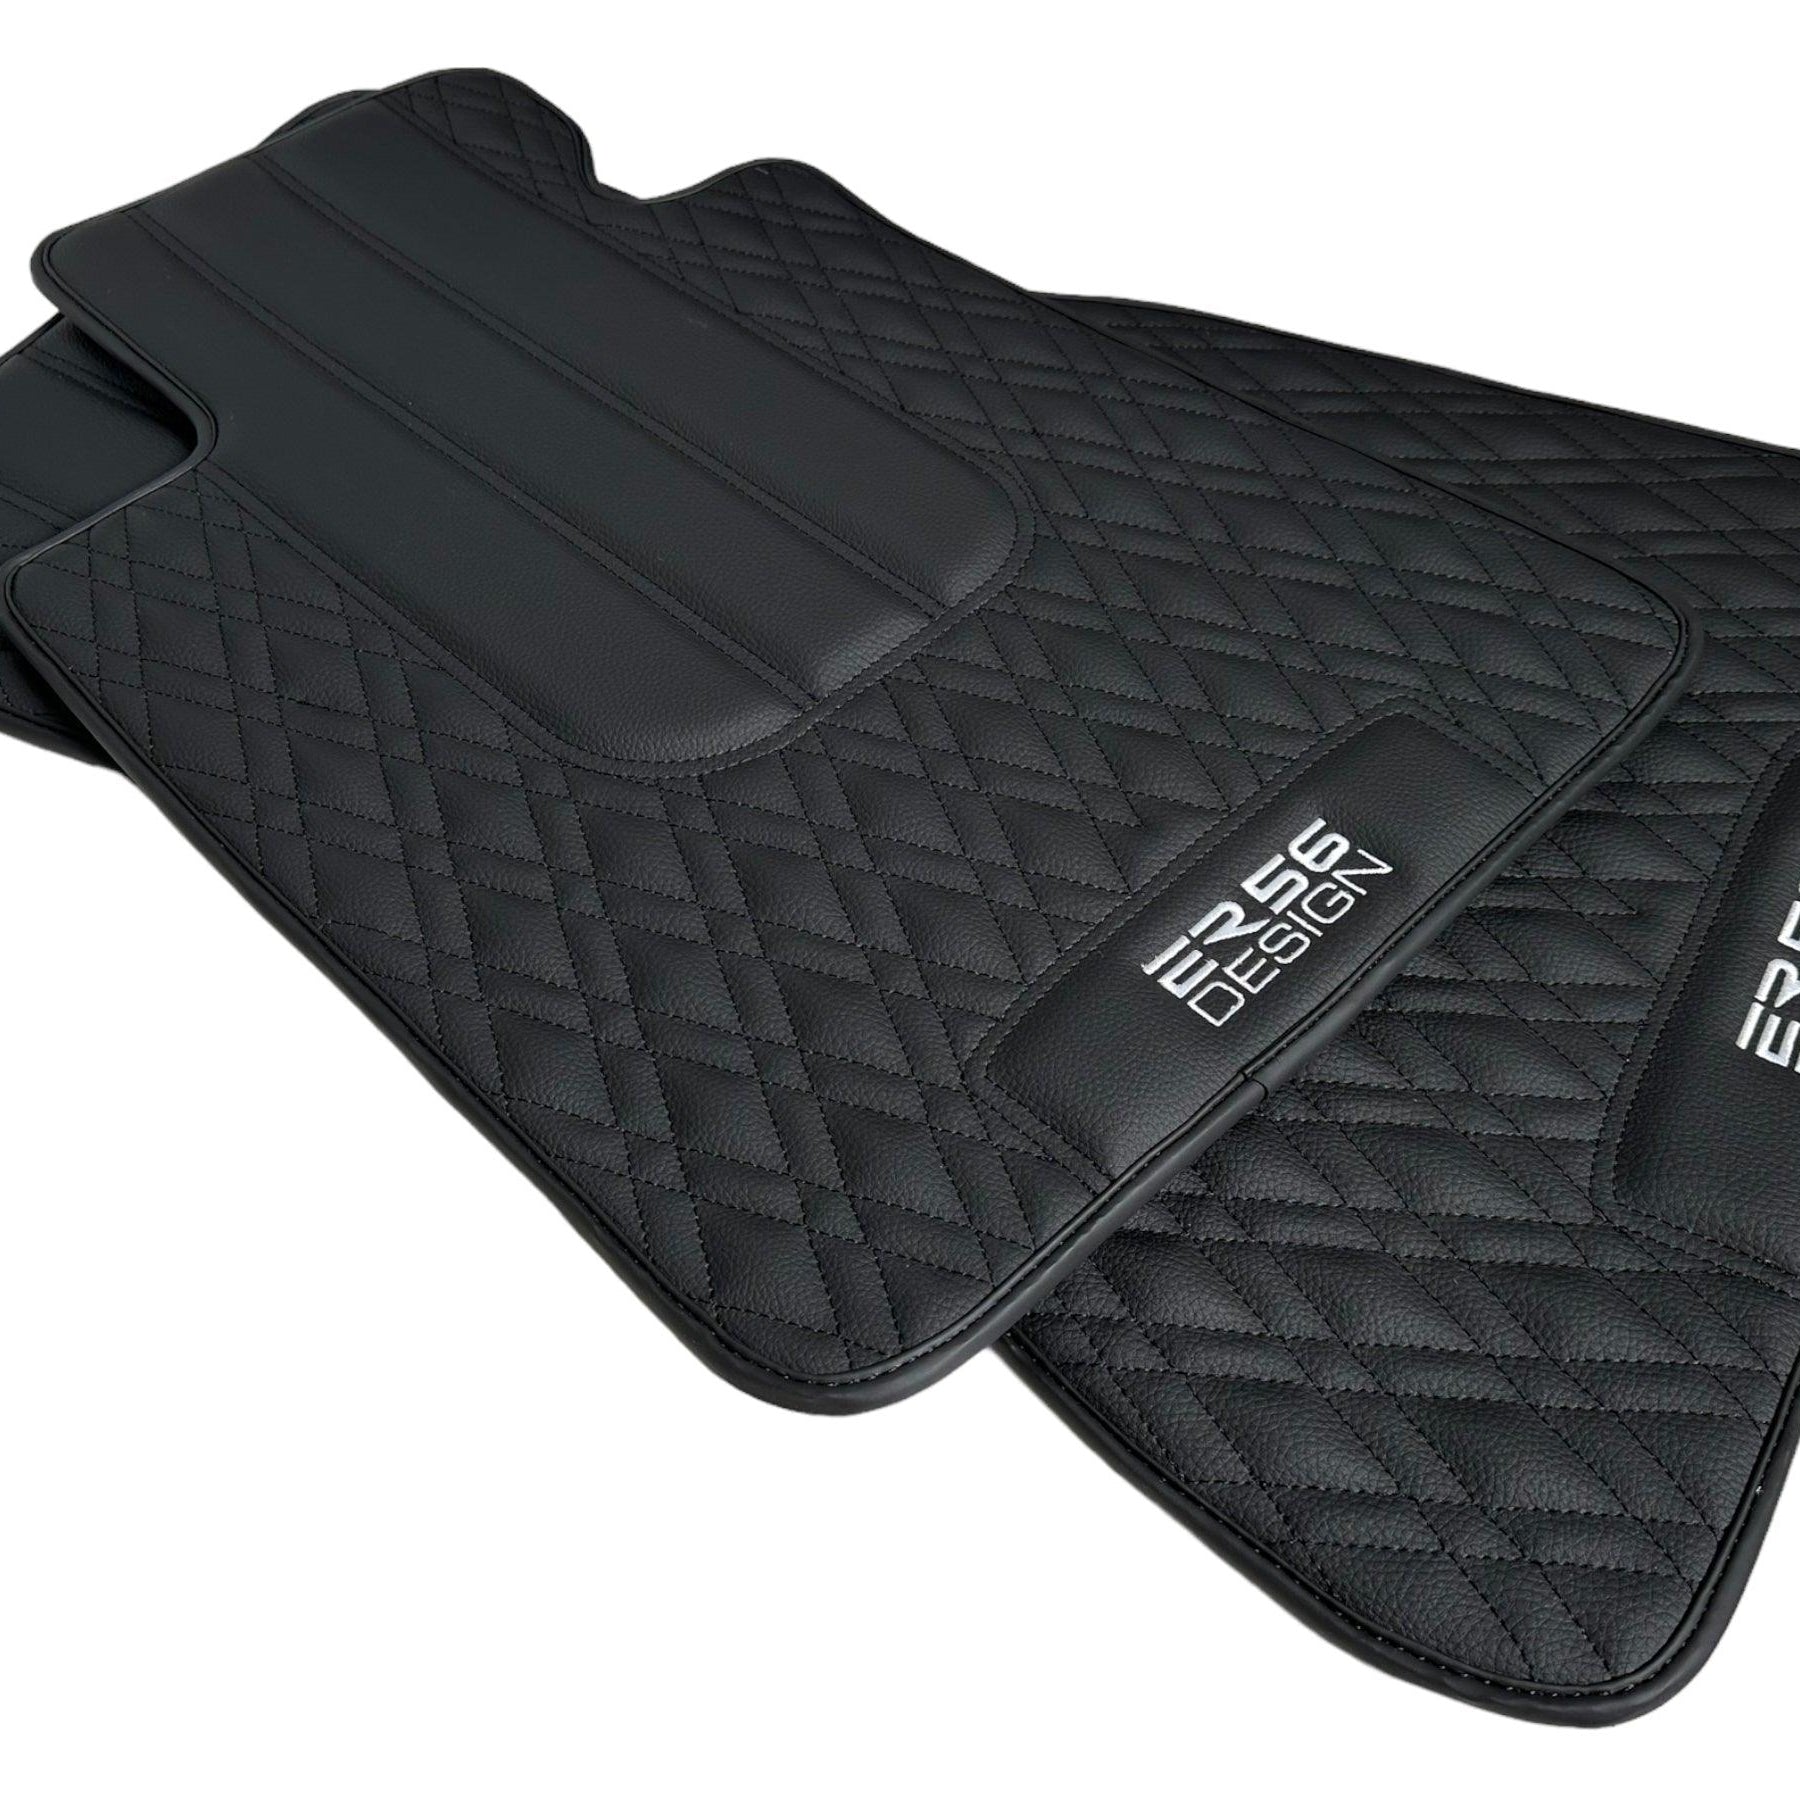 Floor Mats For BMW M5 E34 Black Leather Er56 Design - AutoWin